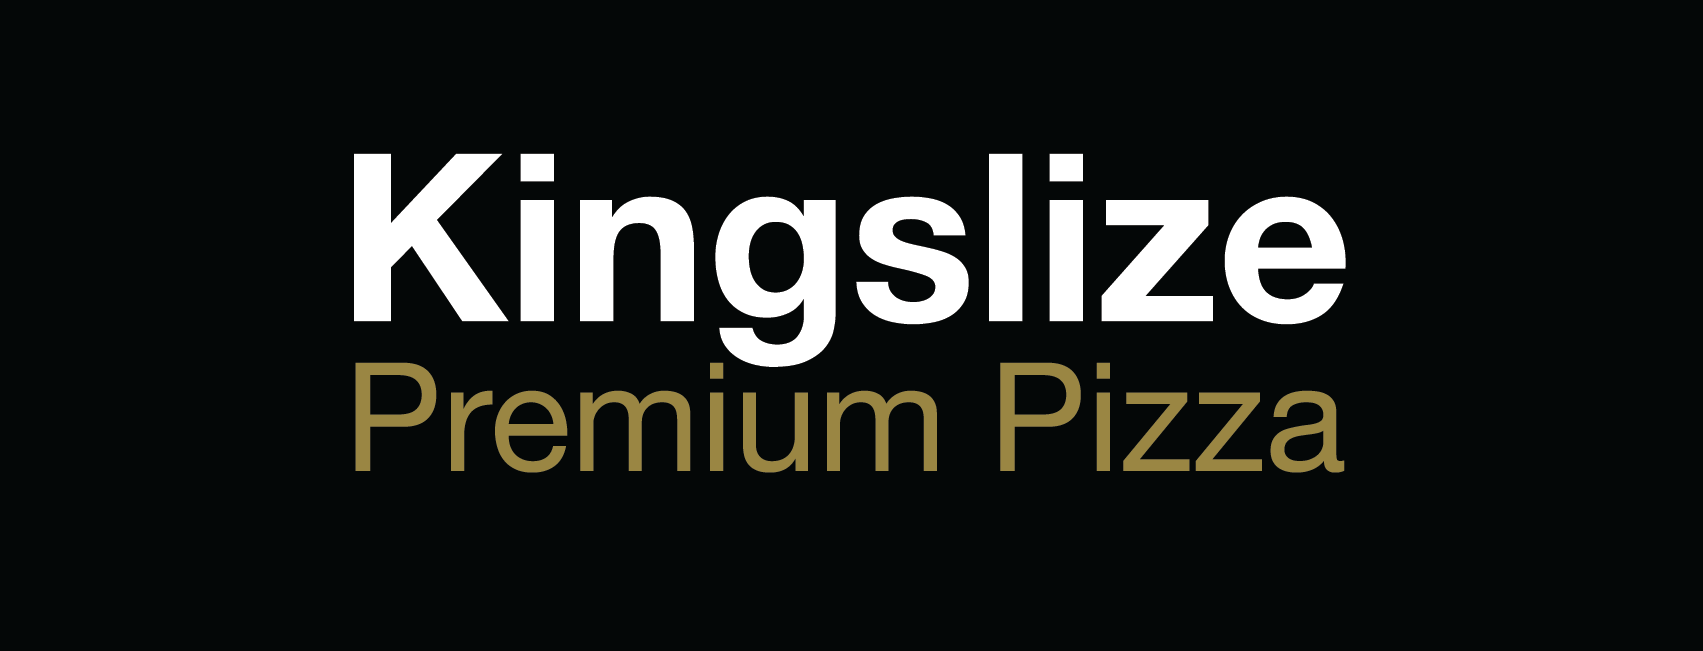 Kingslize pizza